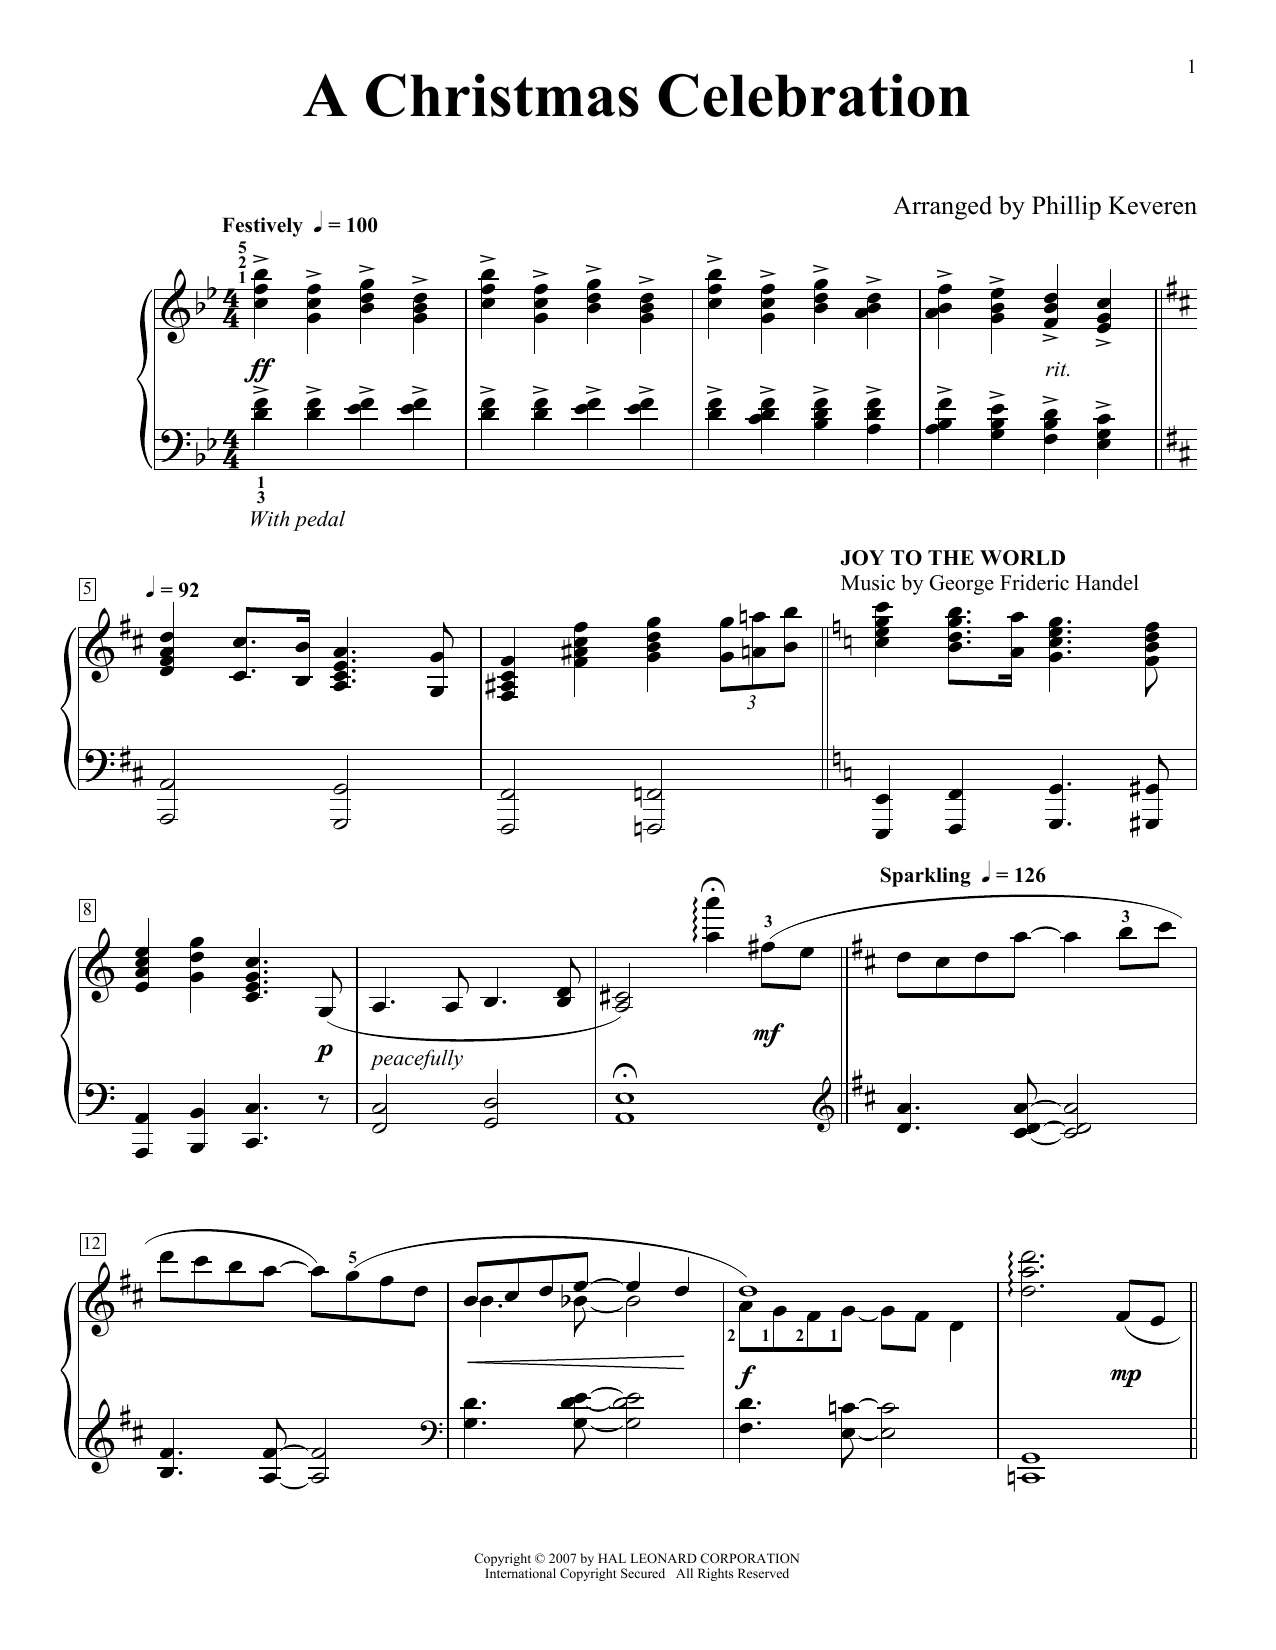 17th Century English Carol A Christmas Celebration (arr. Phillip Keveren) sheet music notes printable PDF score